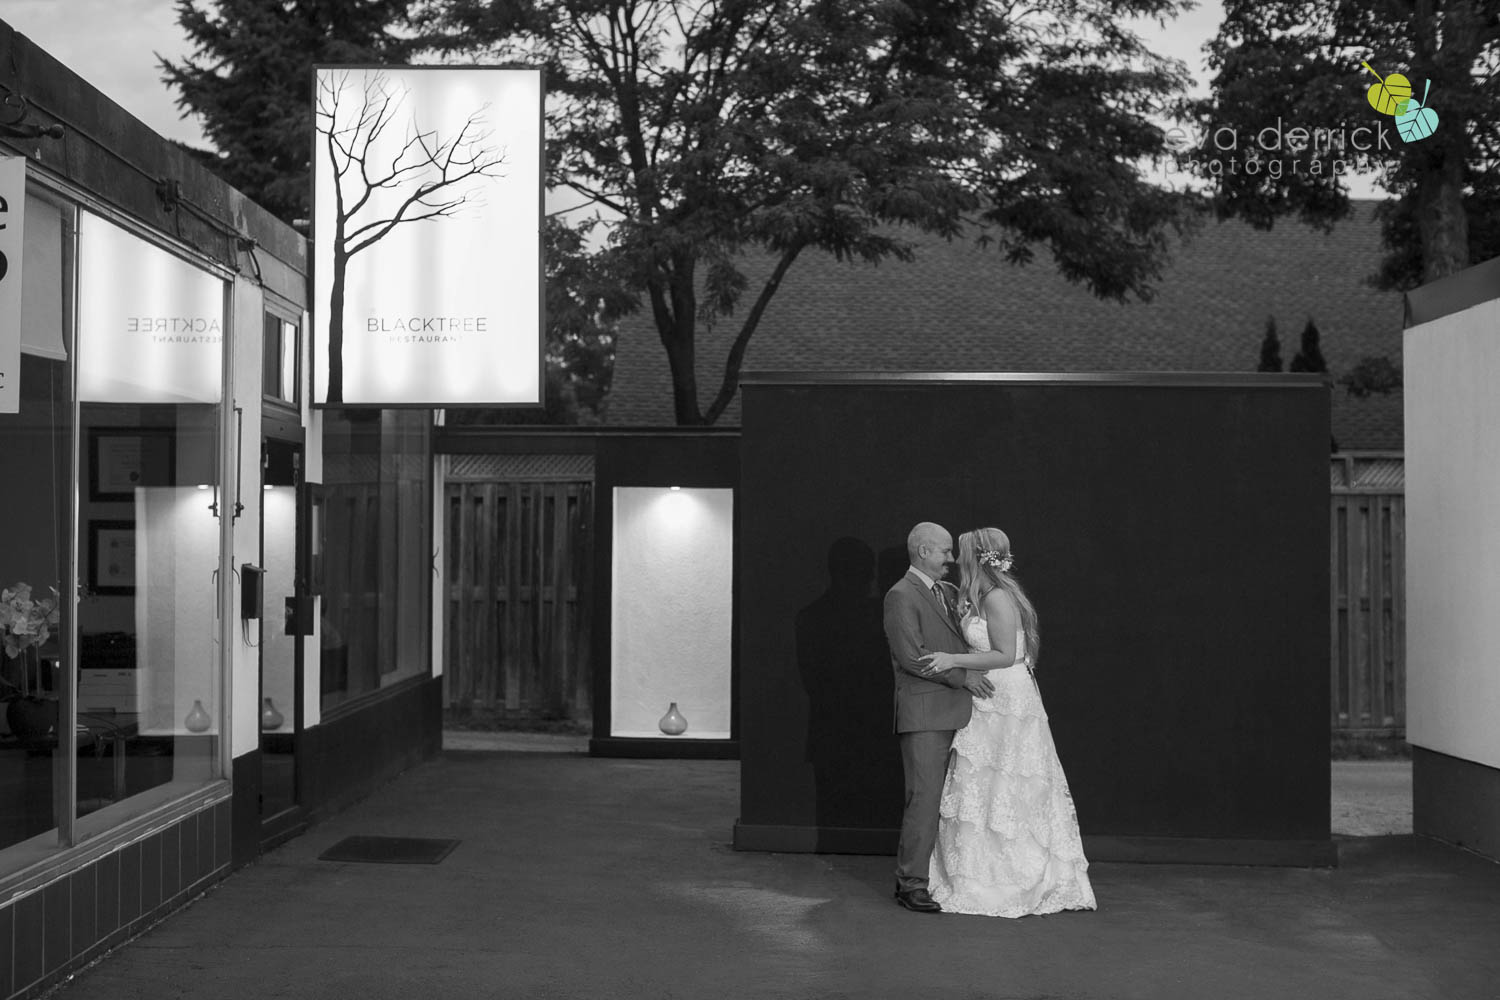 Burlington-Weddings-intimate-weddings-Blacktree-Restaurant-wedding-photo-by-eva-derrick-photography-043.JPG